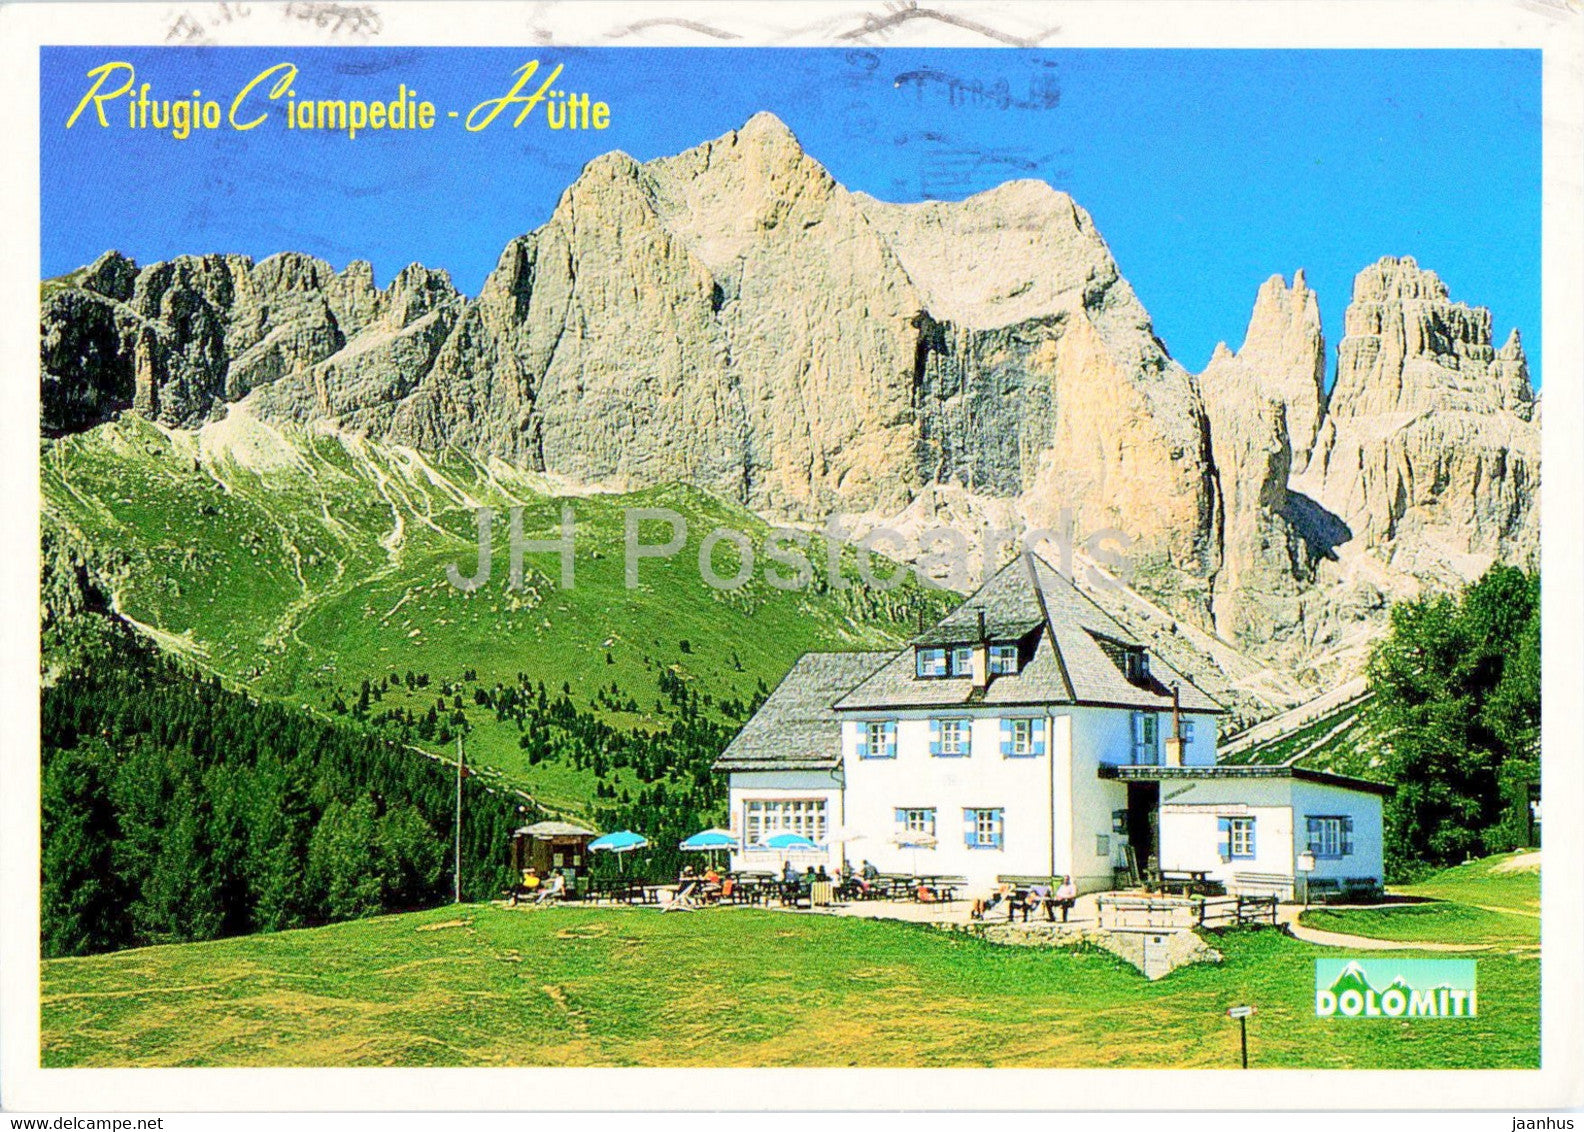 Gruppo del Catinaccio - Dolomiti - Rif Ciampedie - Torri di Vajolet - 2000 - Italy - used - JH Postcards